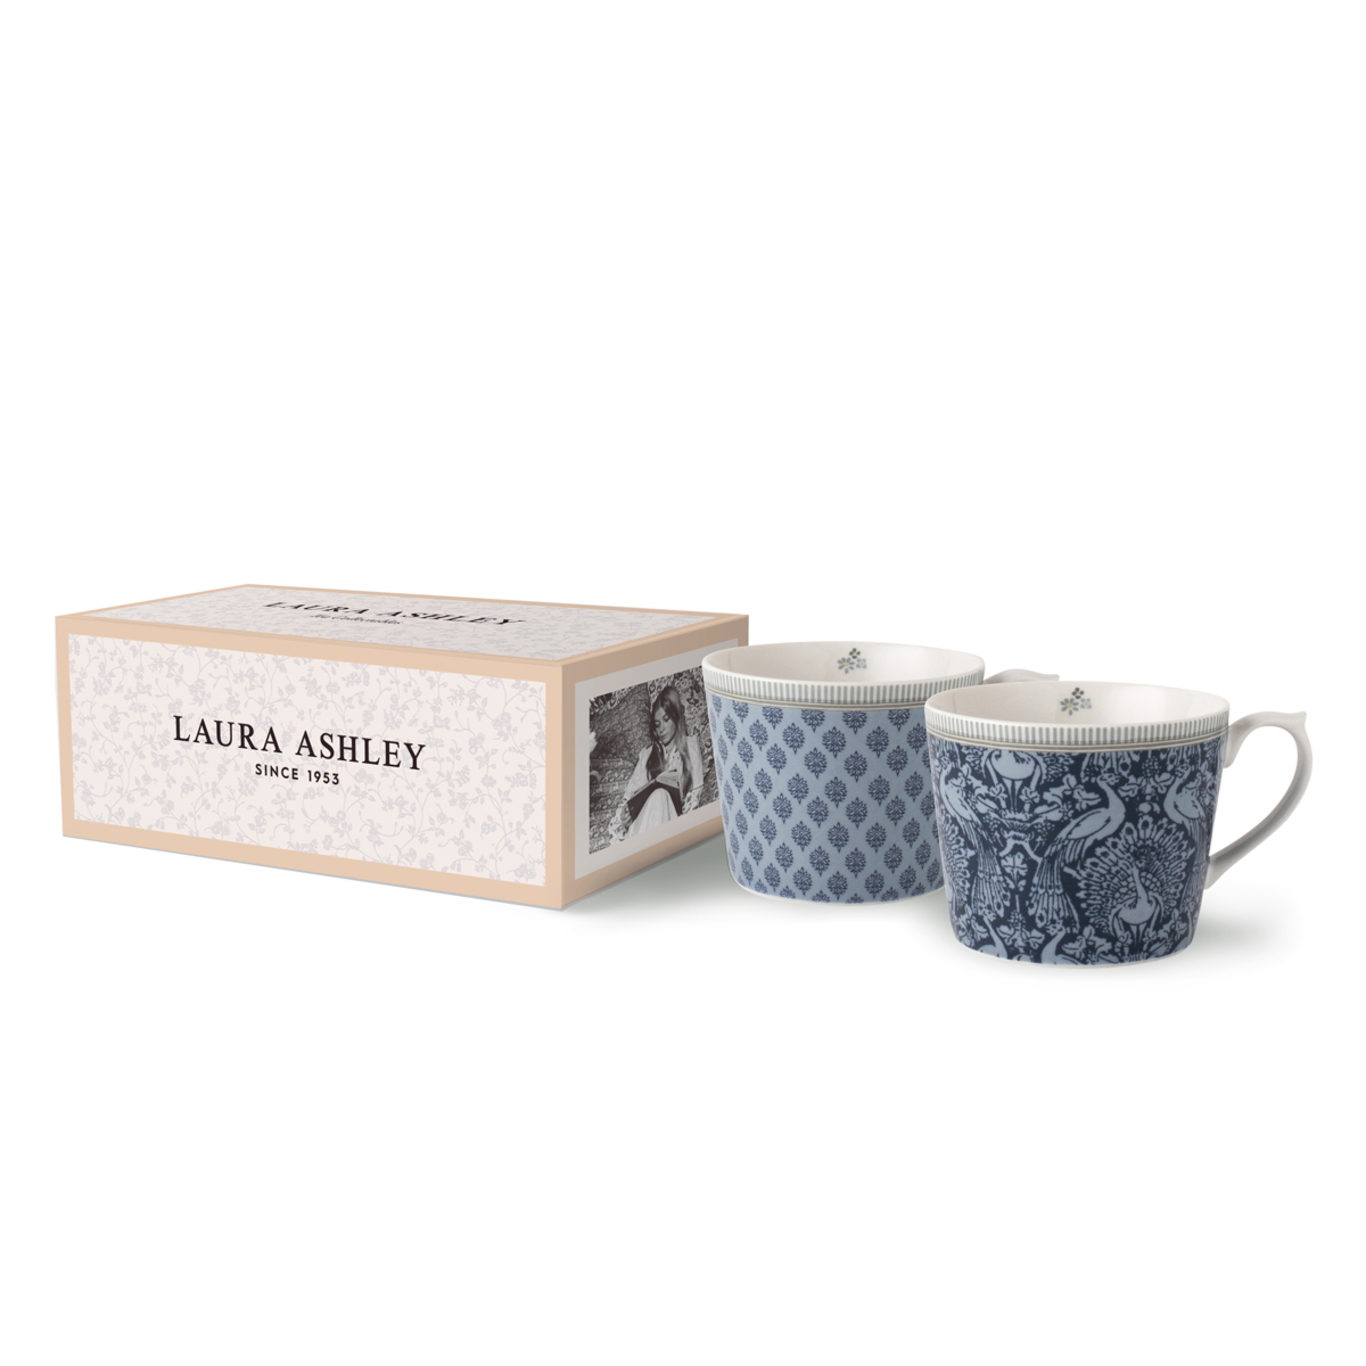 Laura Ashley tea collectables Arkiver - Laura Ashley Sverige